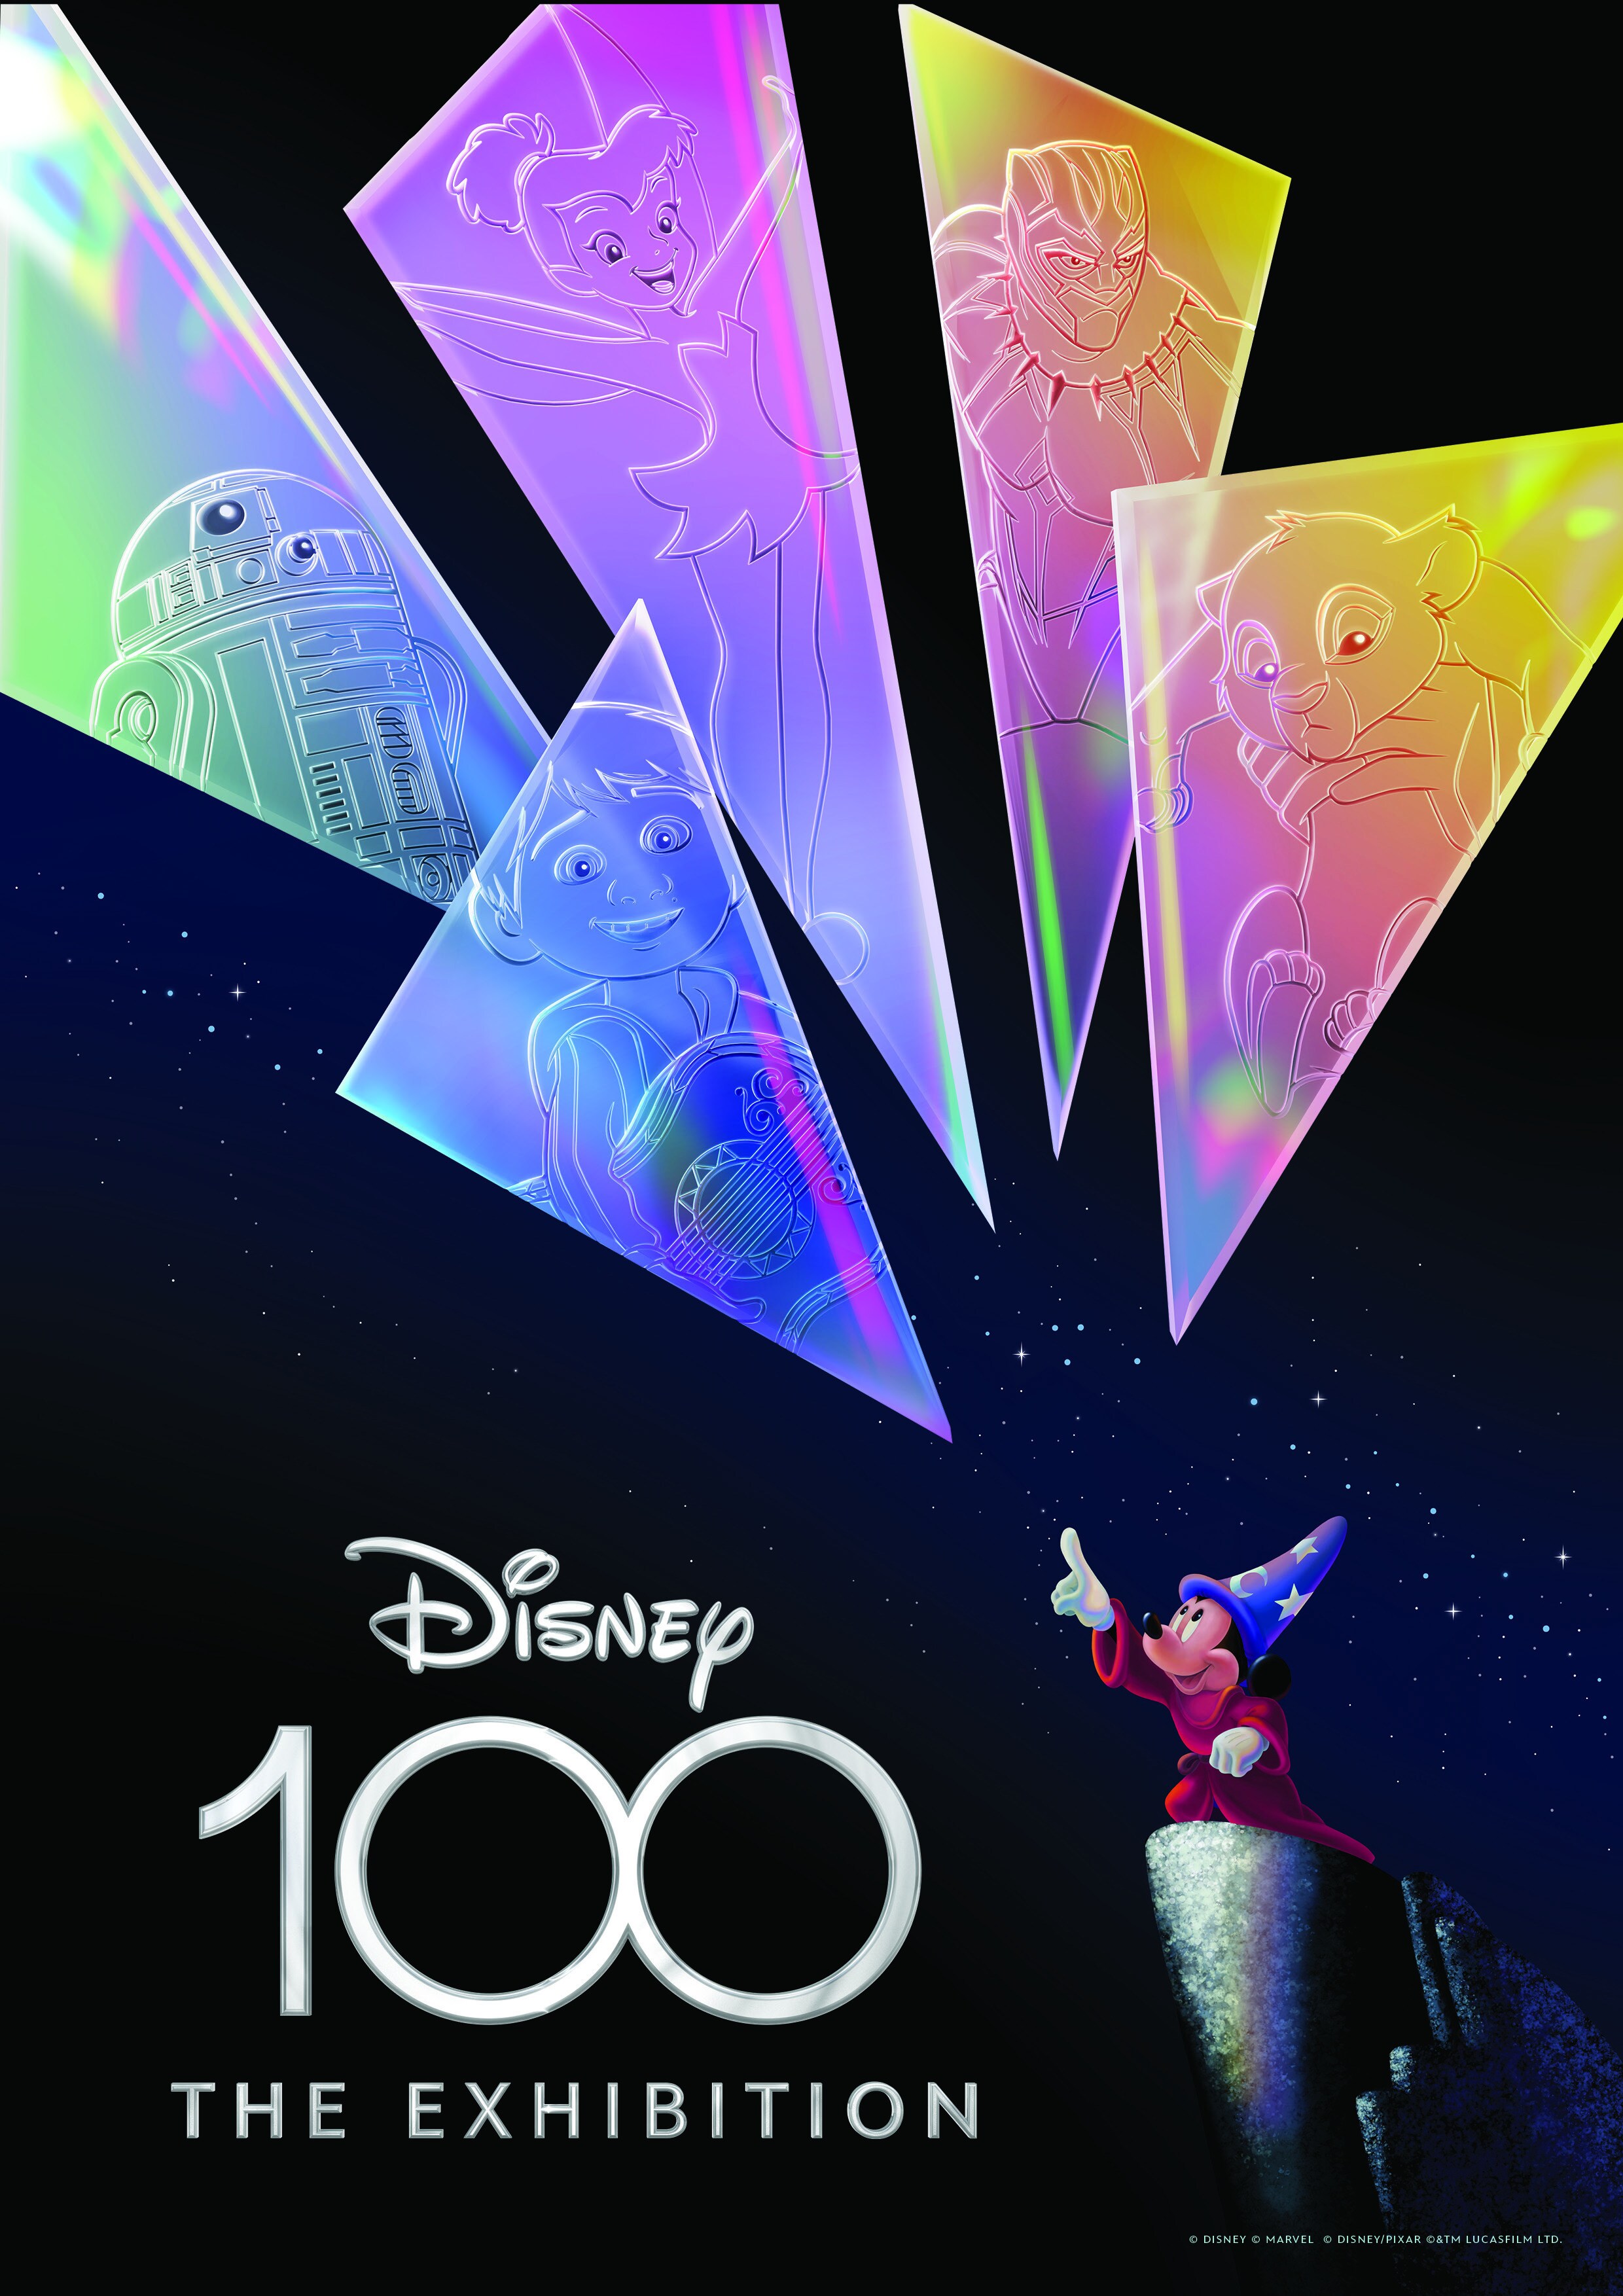 Disney 100 Celebration Annual